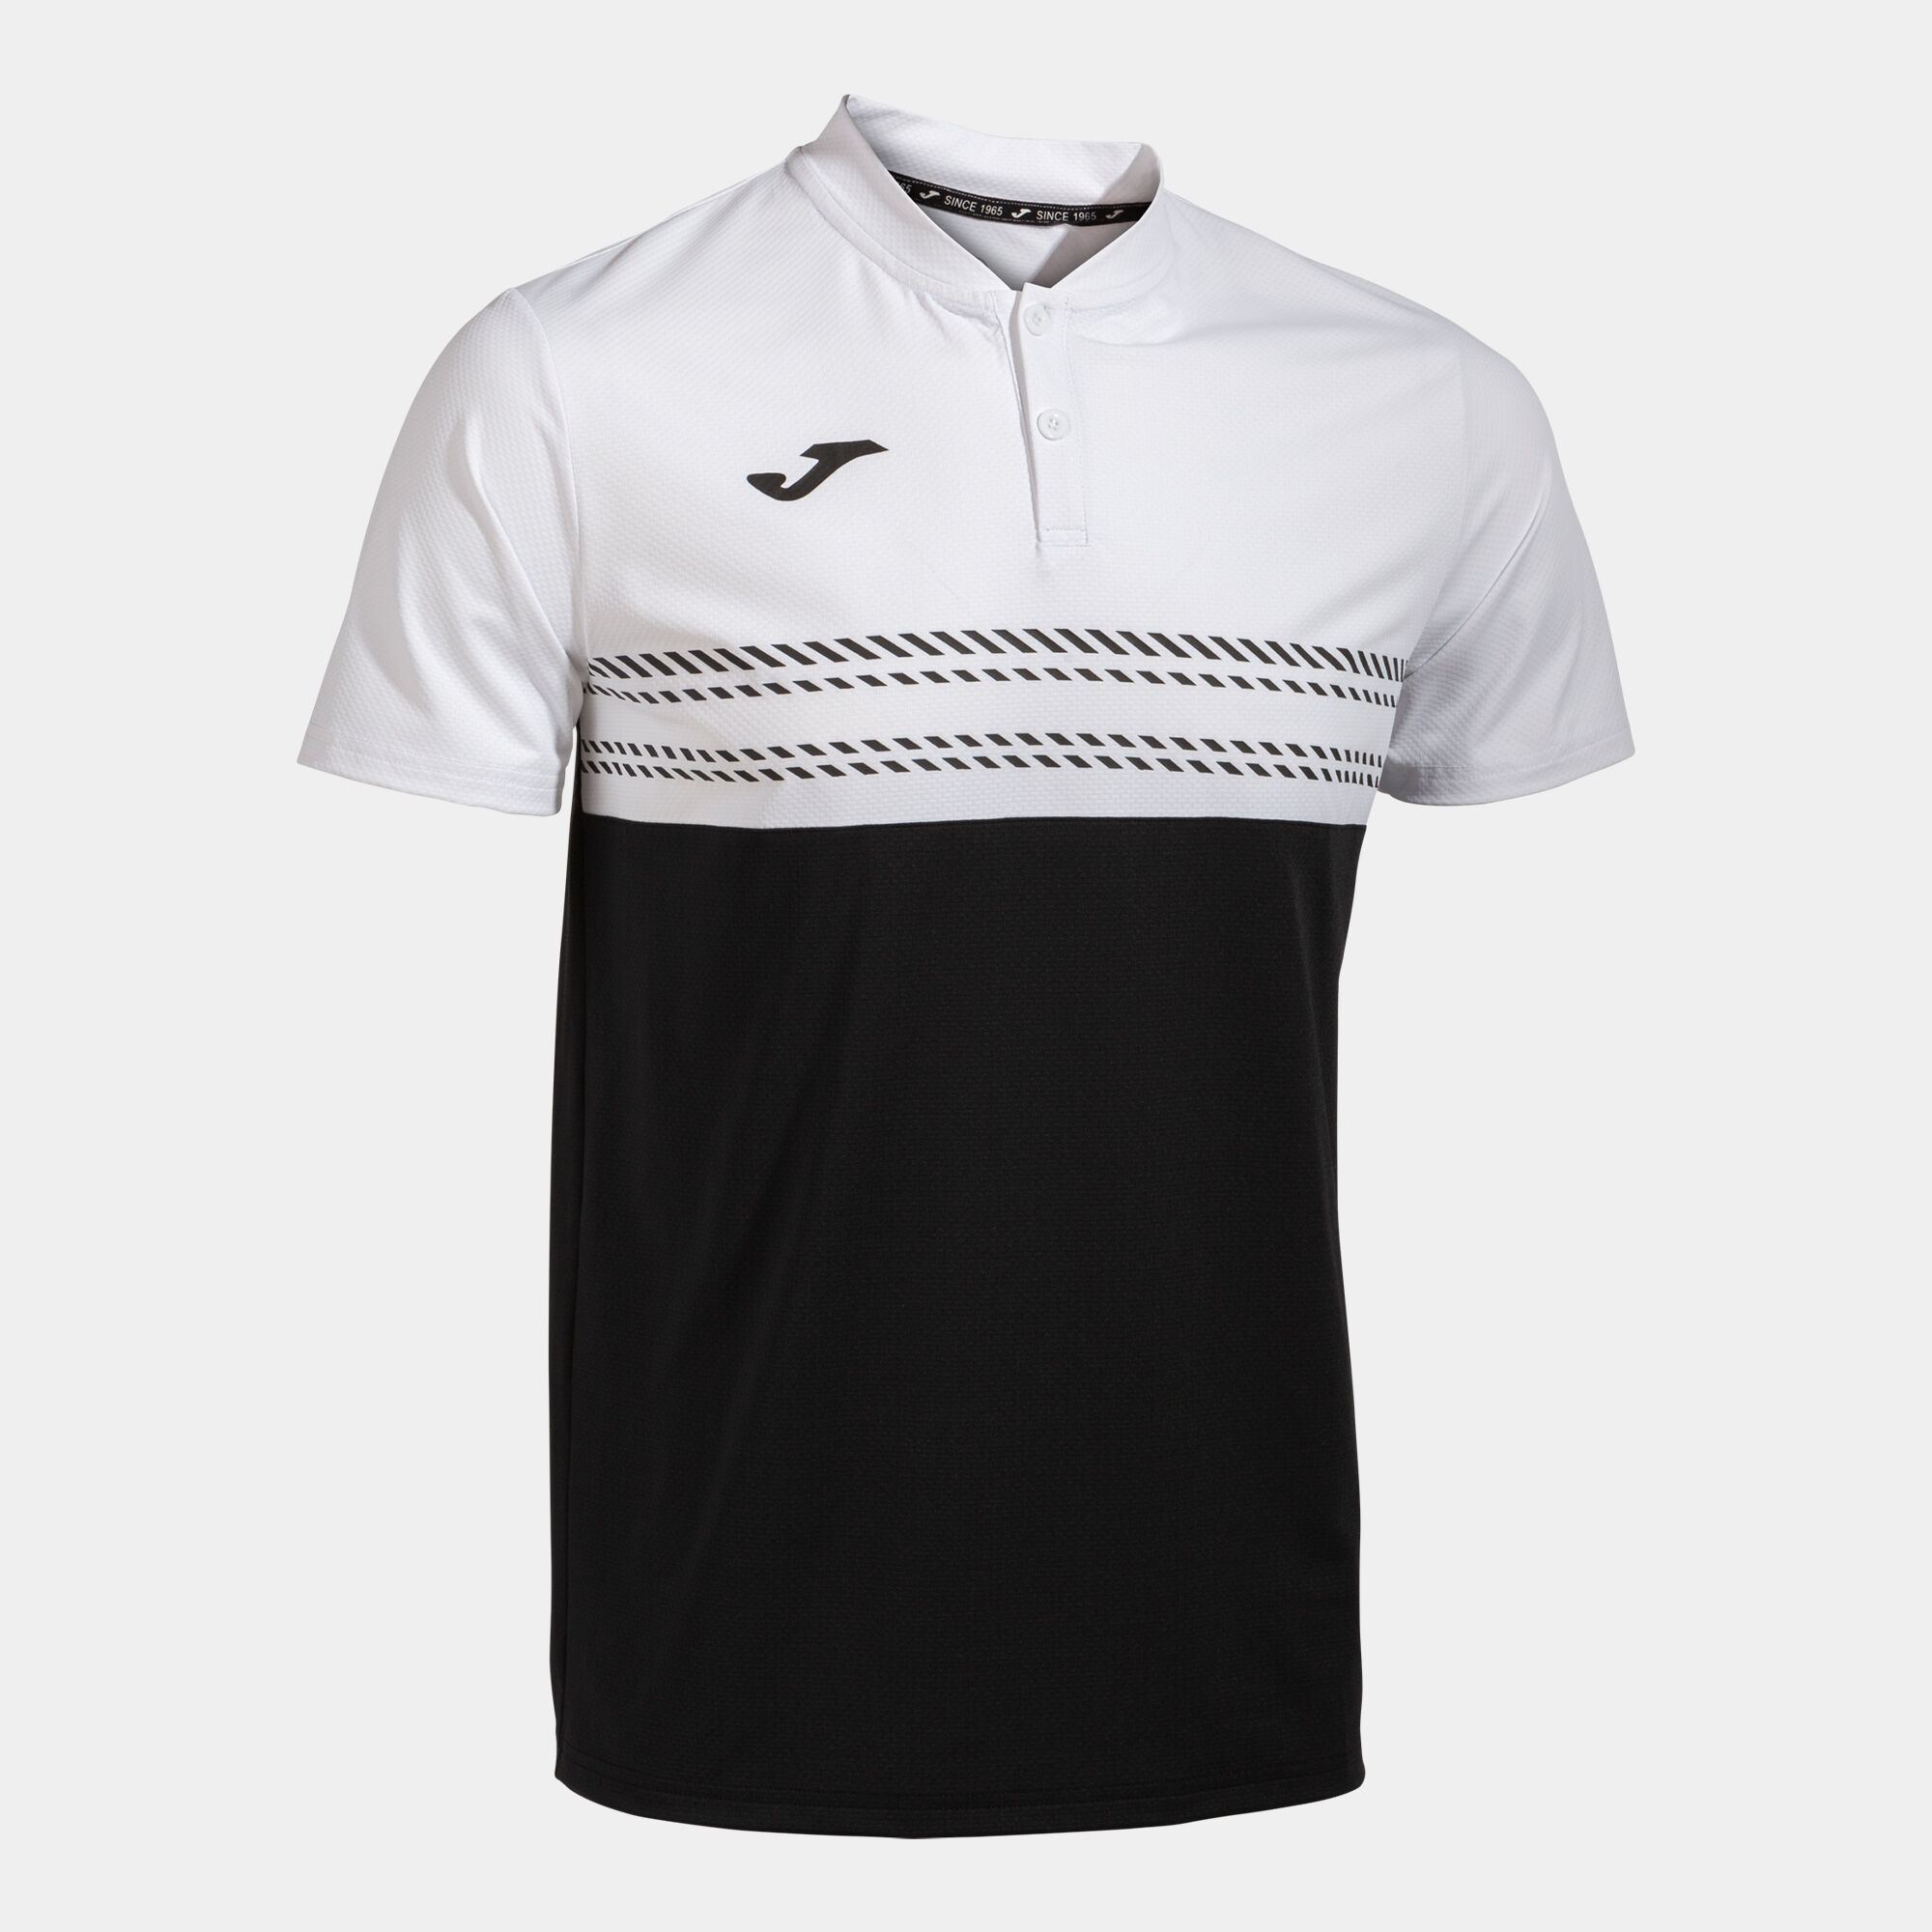 Polo shirt short-sleeve man Smash black white